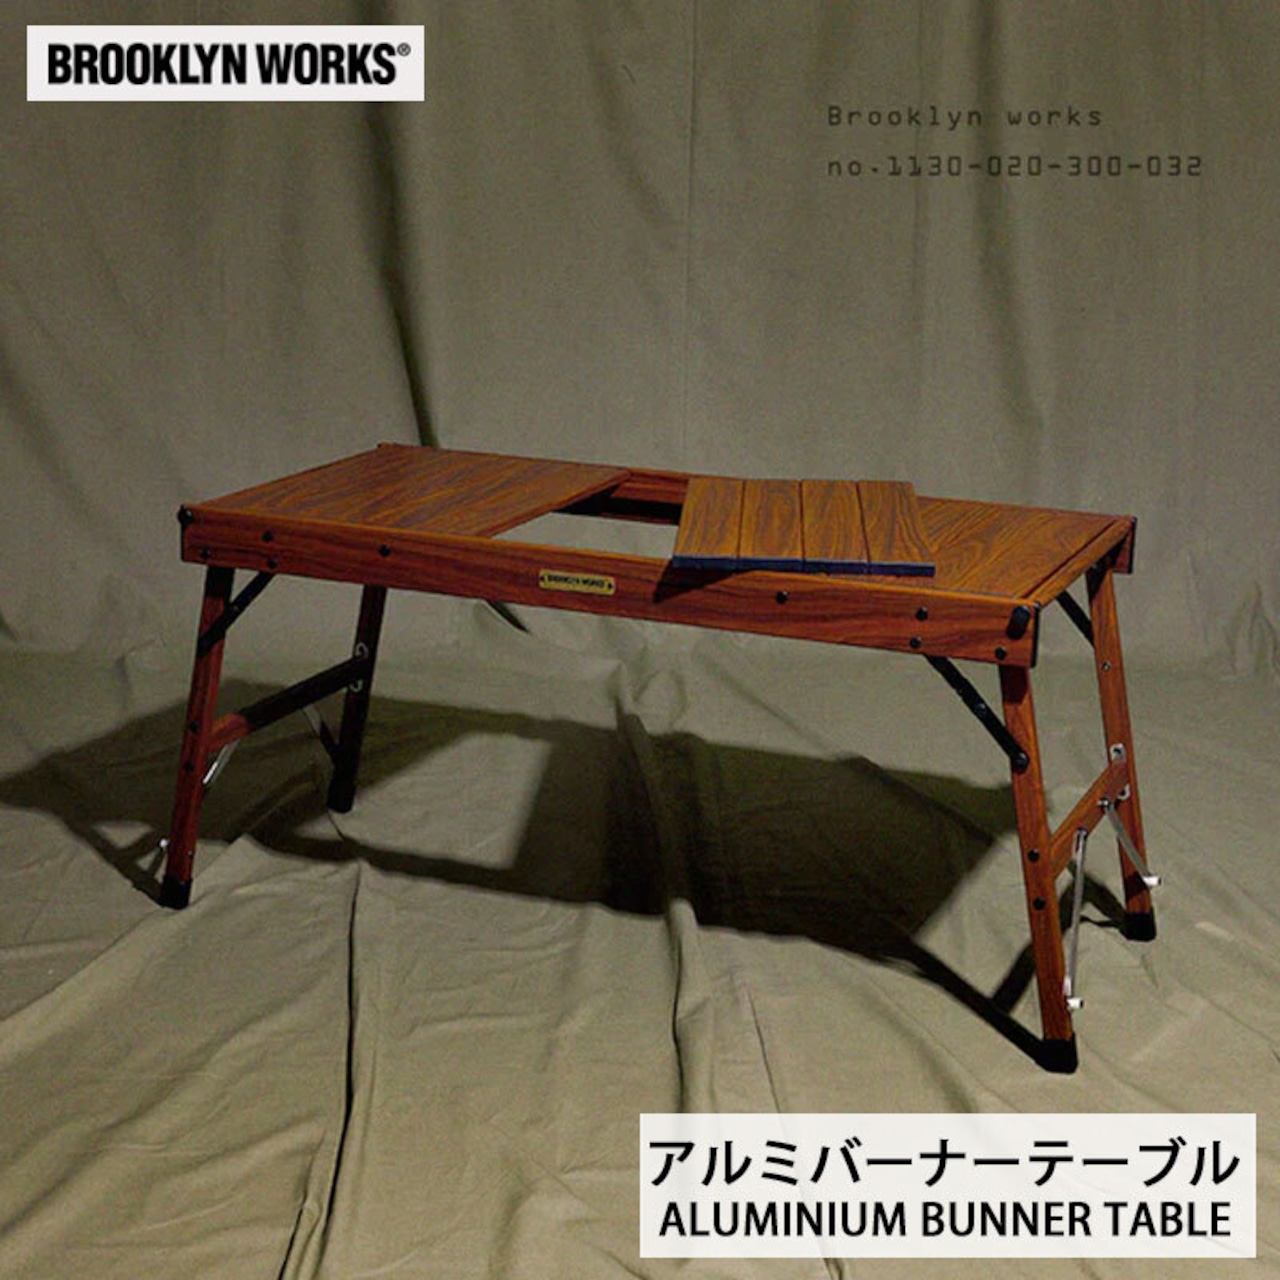 BROOKLYNWORKS ブルックリンワークス ALUMINIUM BUNNER TABLE アルミバーナーテーブル